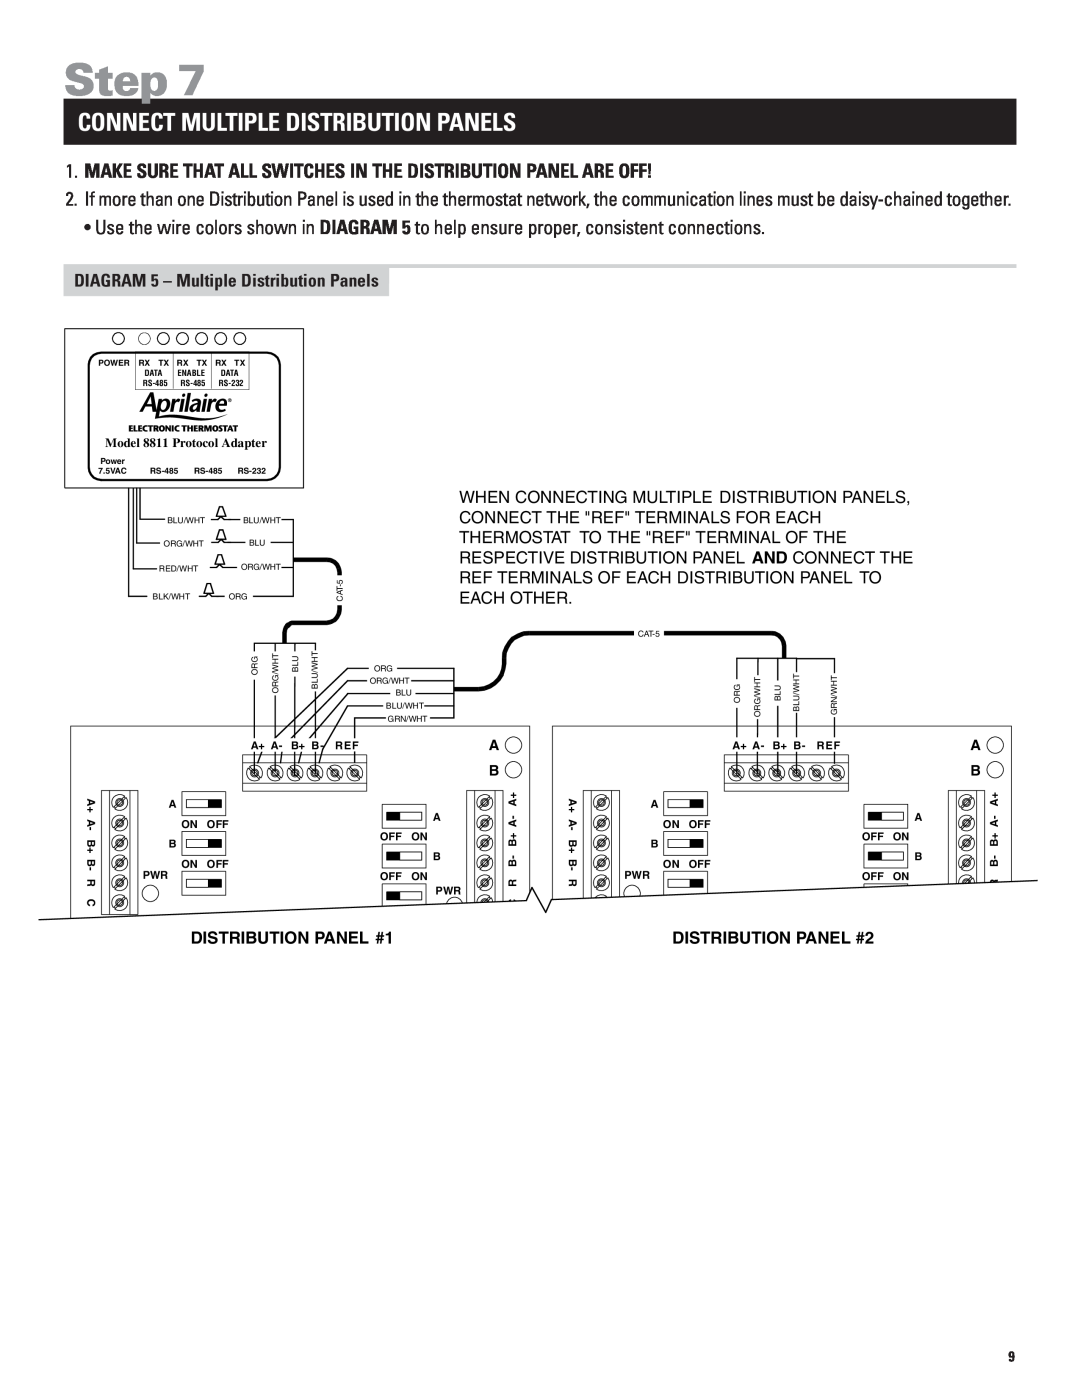 Echo 8870 Connect Multiple Distribution Panels, Step, DIAGRAM 5 - Multiple Distribution Panels, DISTRIBUTION PANEL #1 